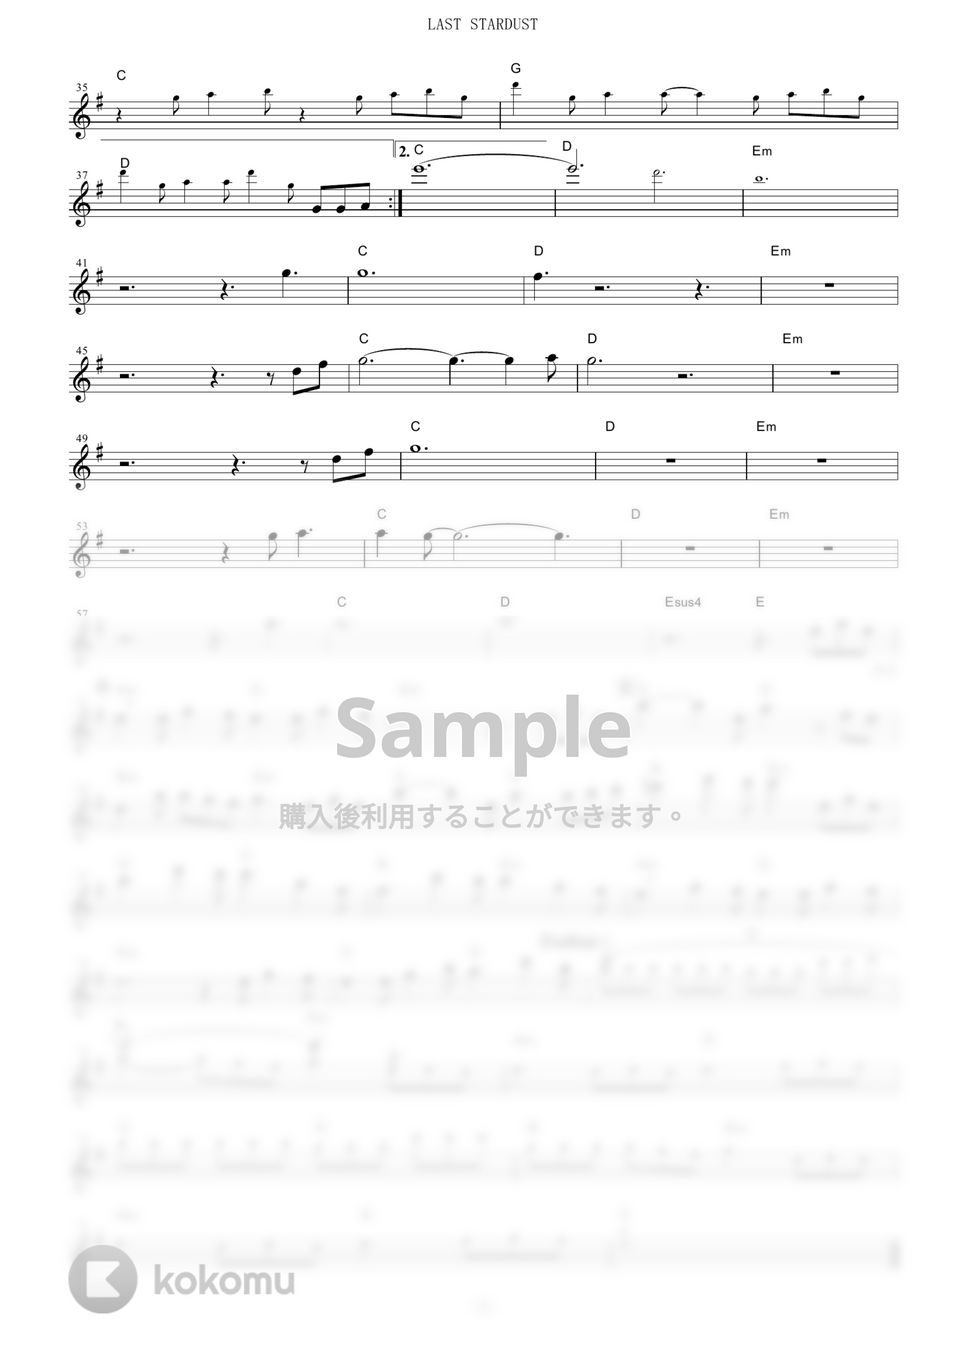 Aimer - LAST STARDUST (『Fate/stay night [Unlimited Blade Works]』 / in Bb) by muta-sax